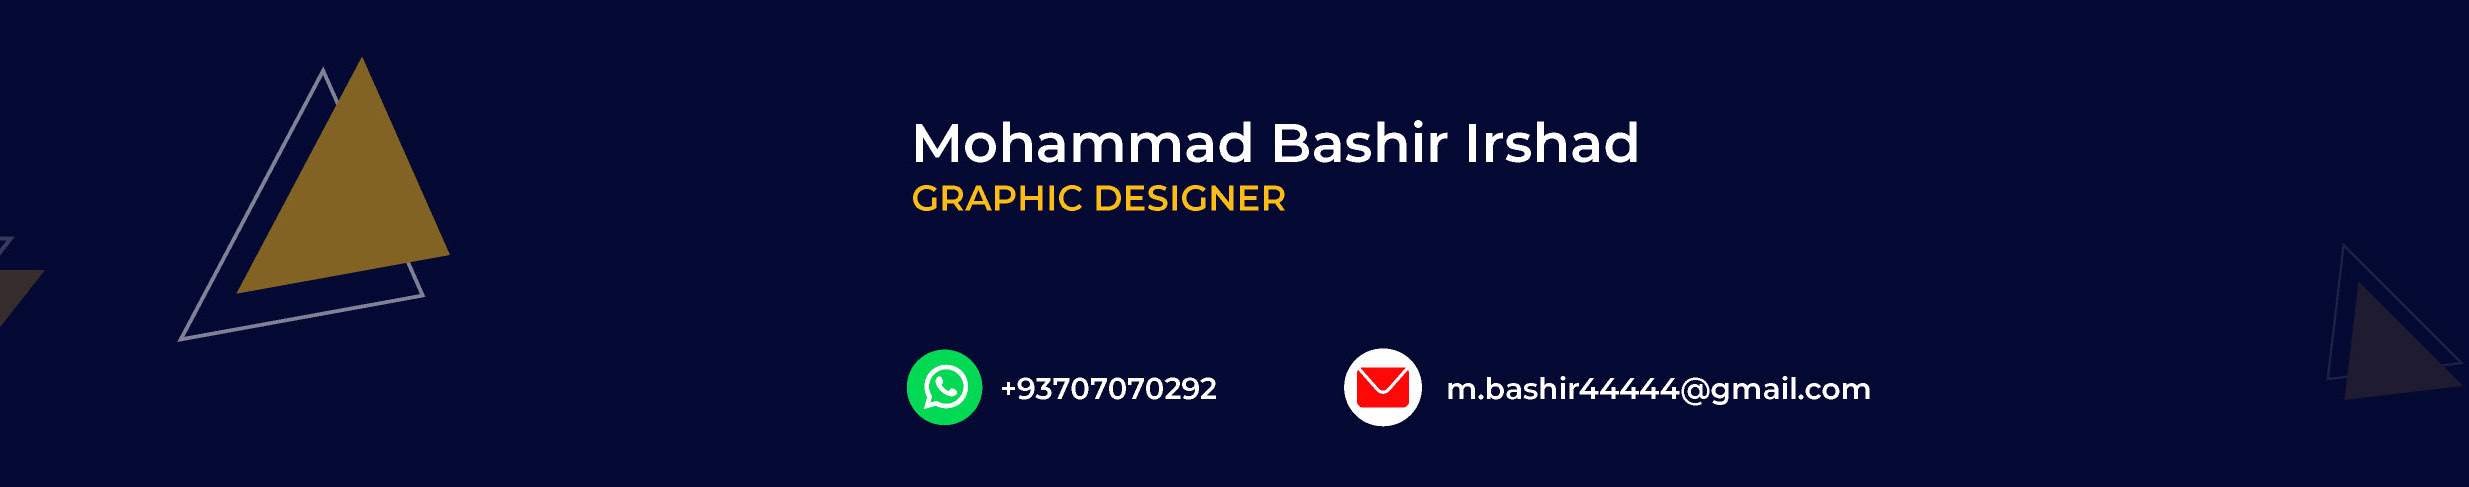 Mohammad Bashir Irshad's profile banner